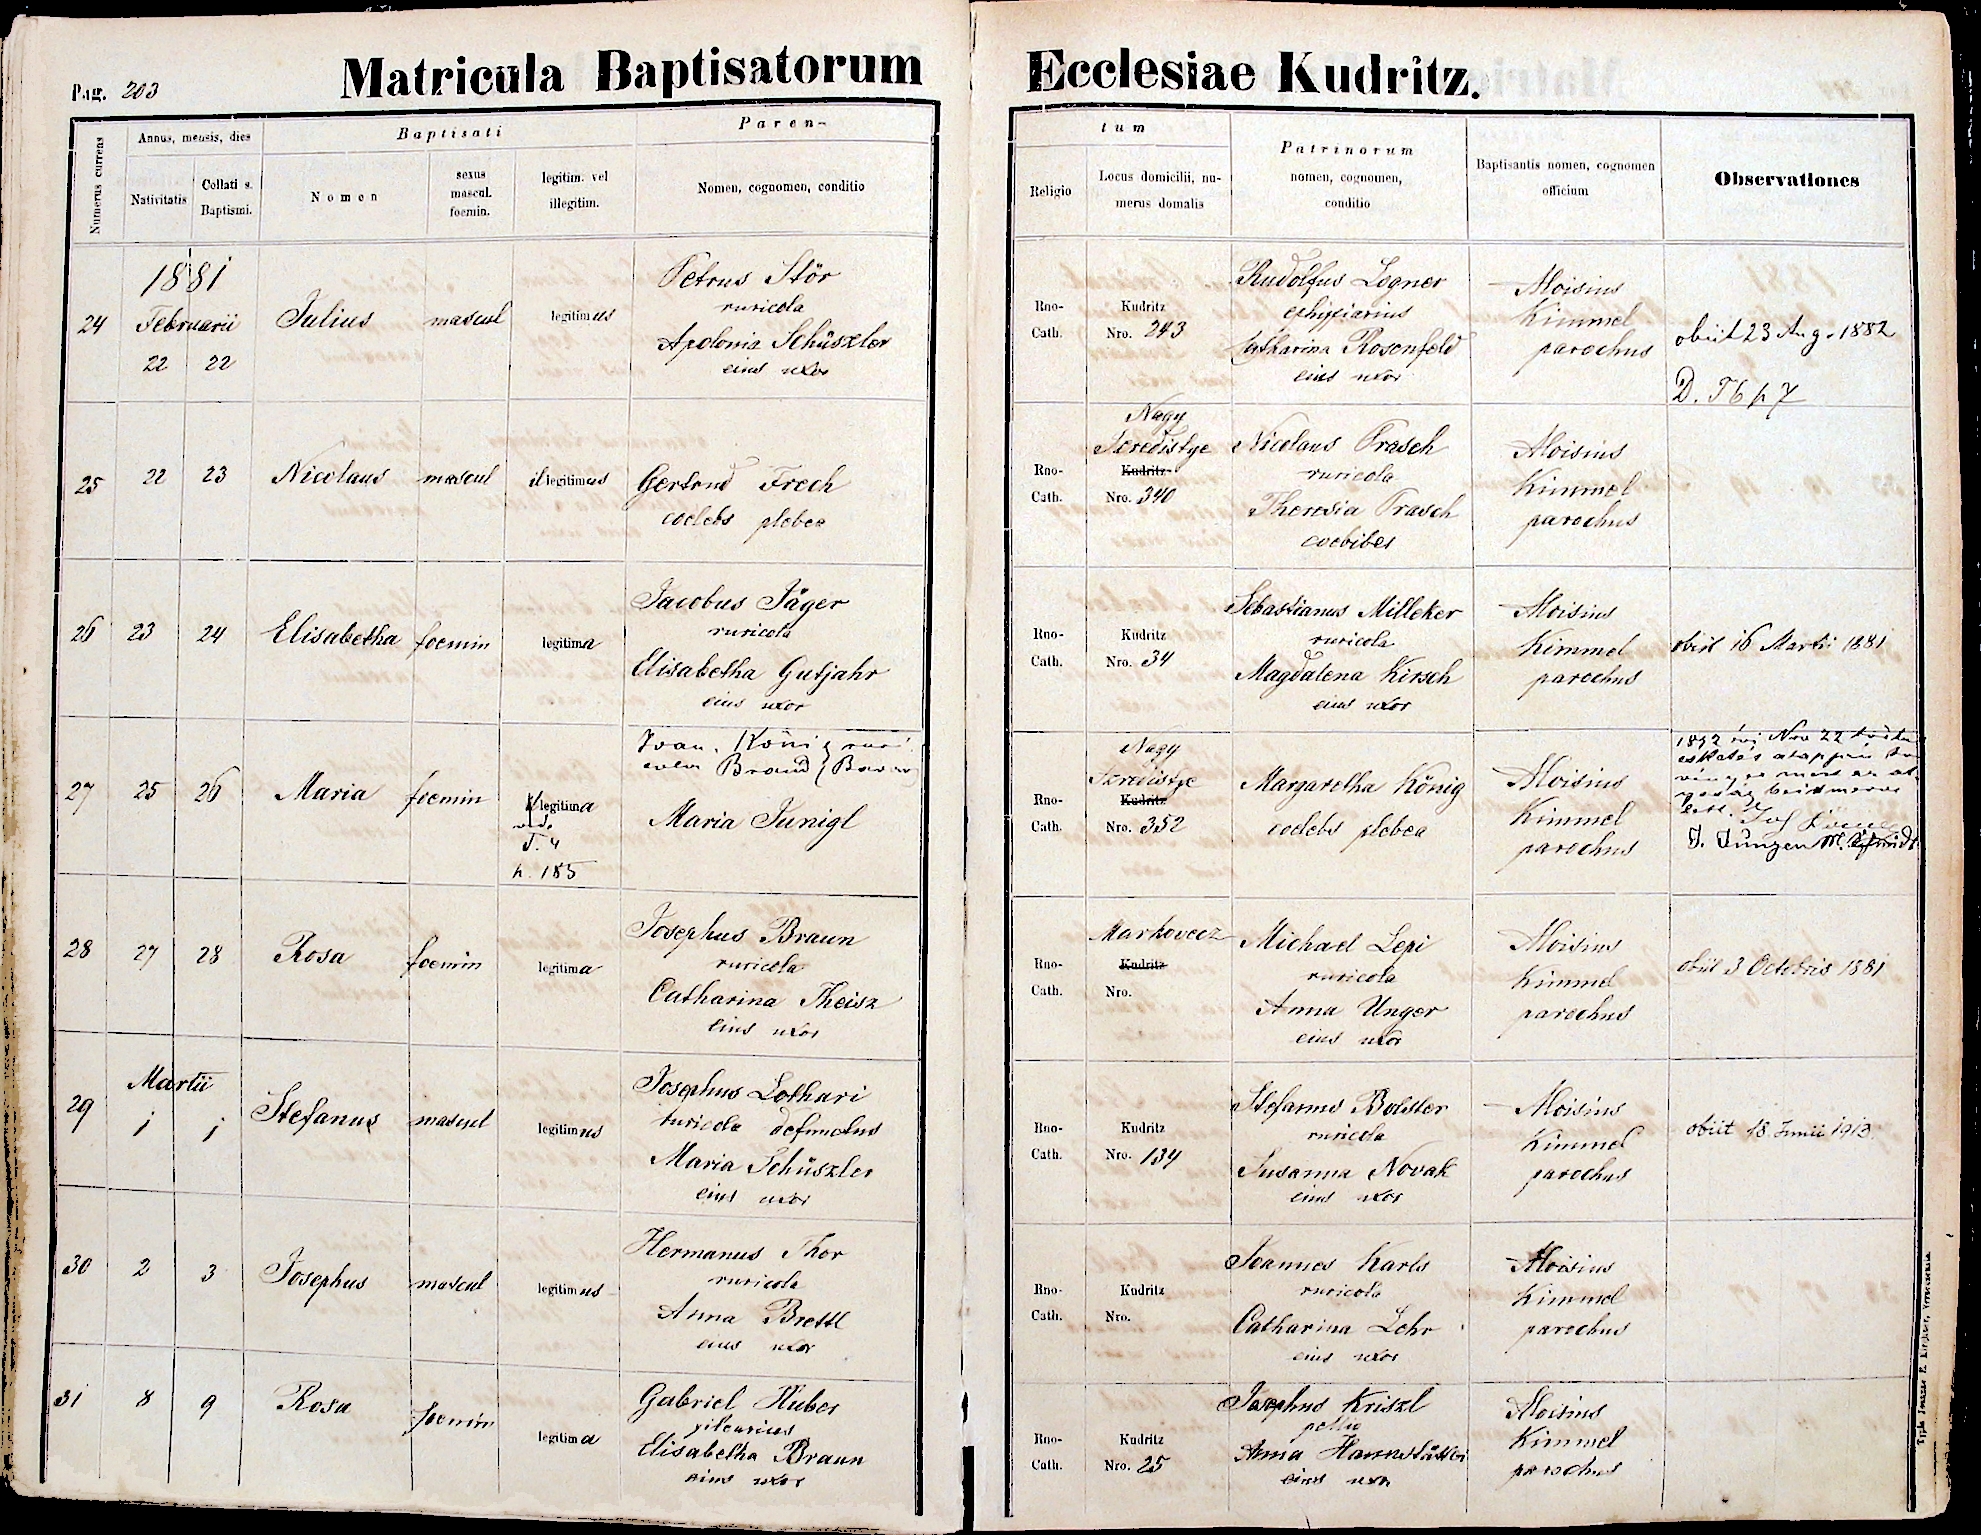 images/church_records/BIRTHS/1884-1899B/1898/203